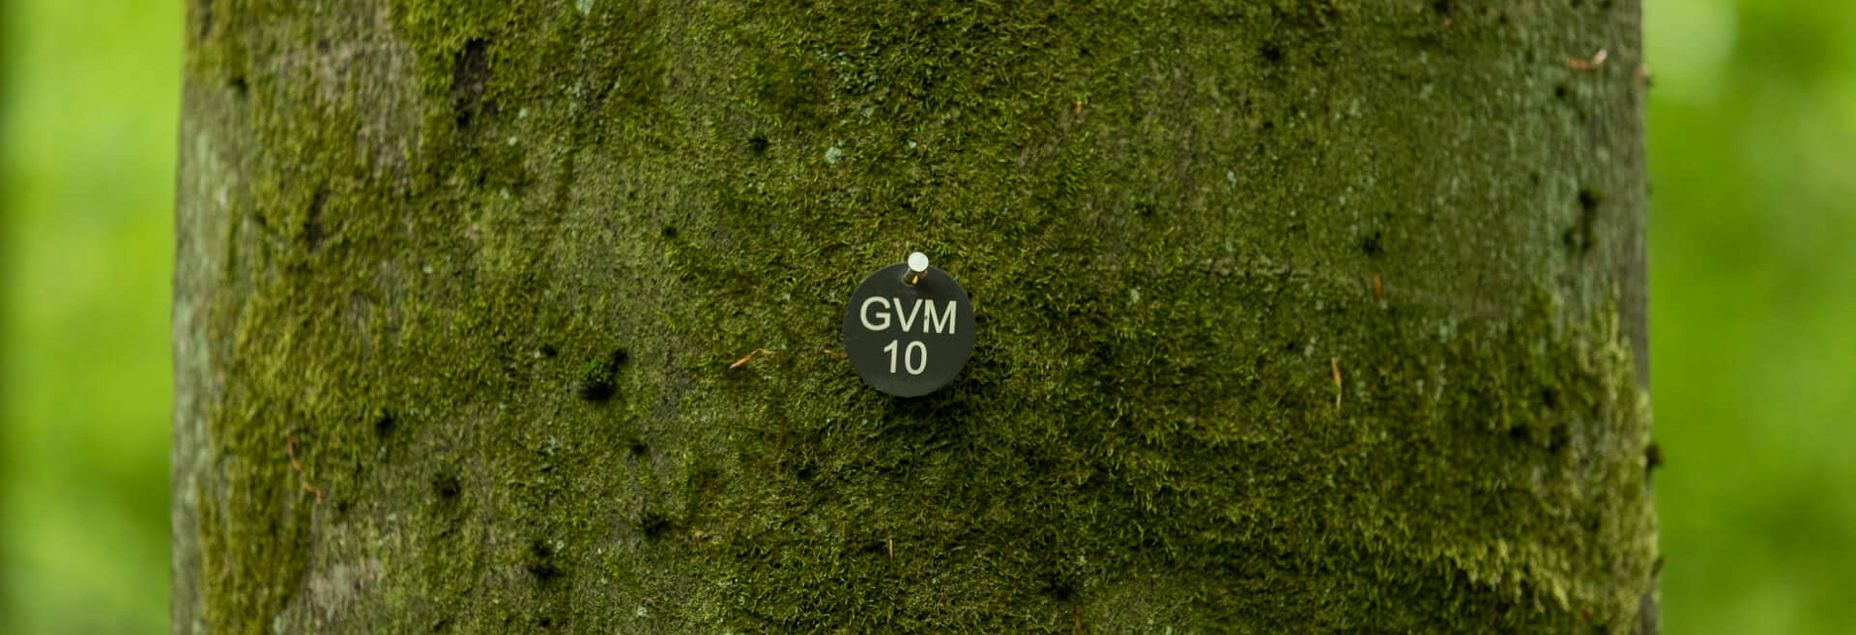 Baum GVM 10 - Plakette